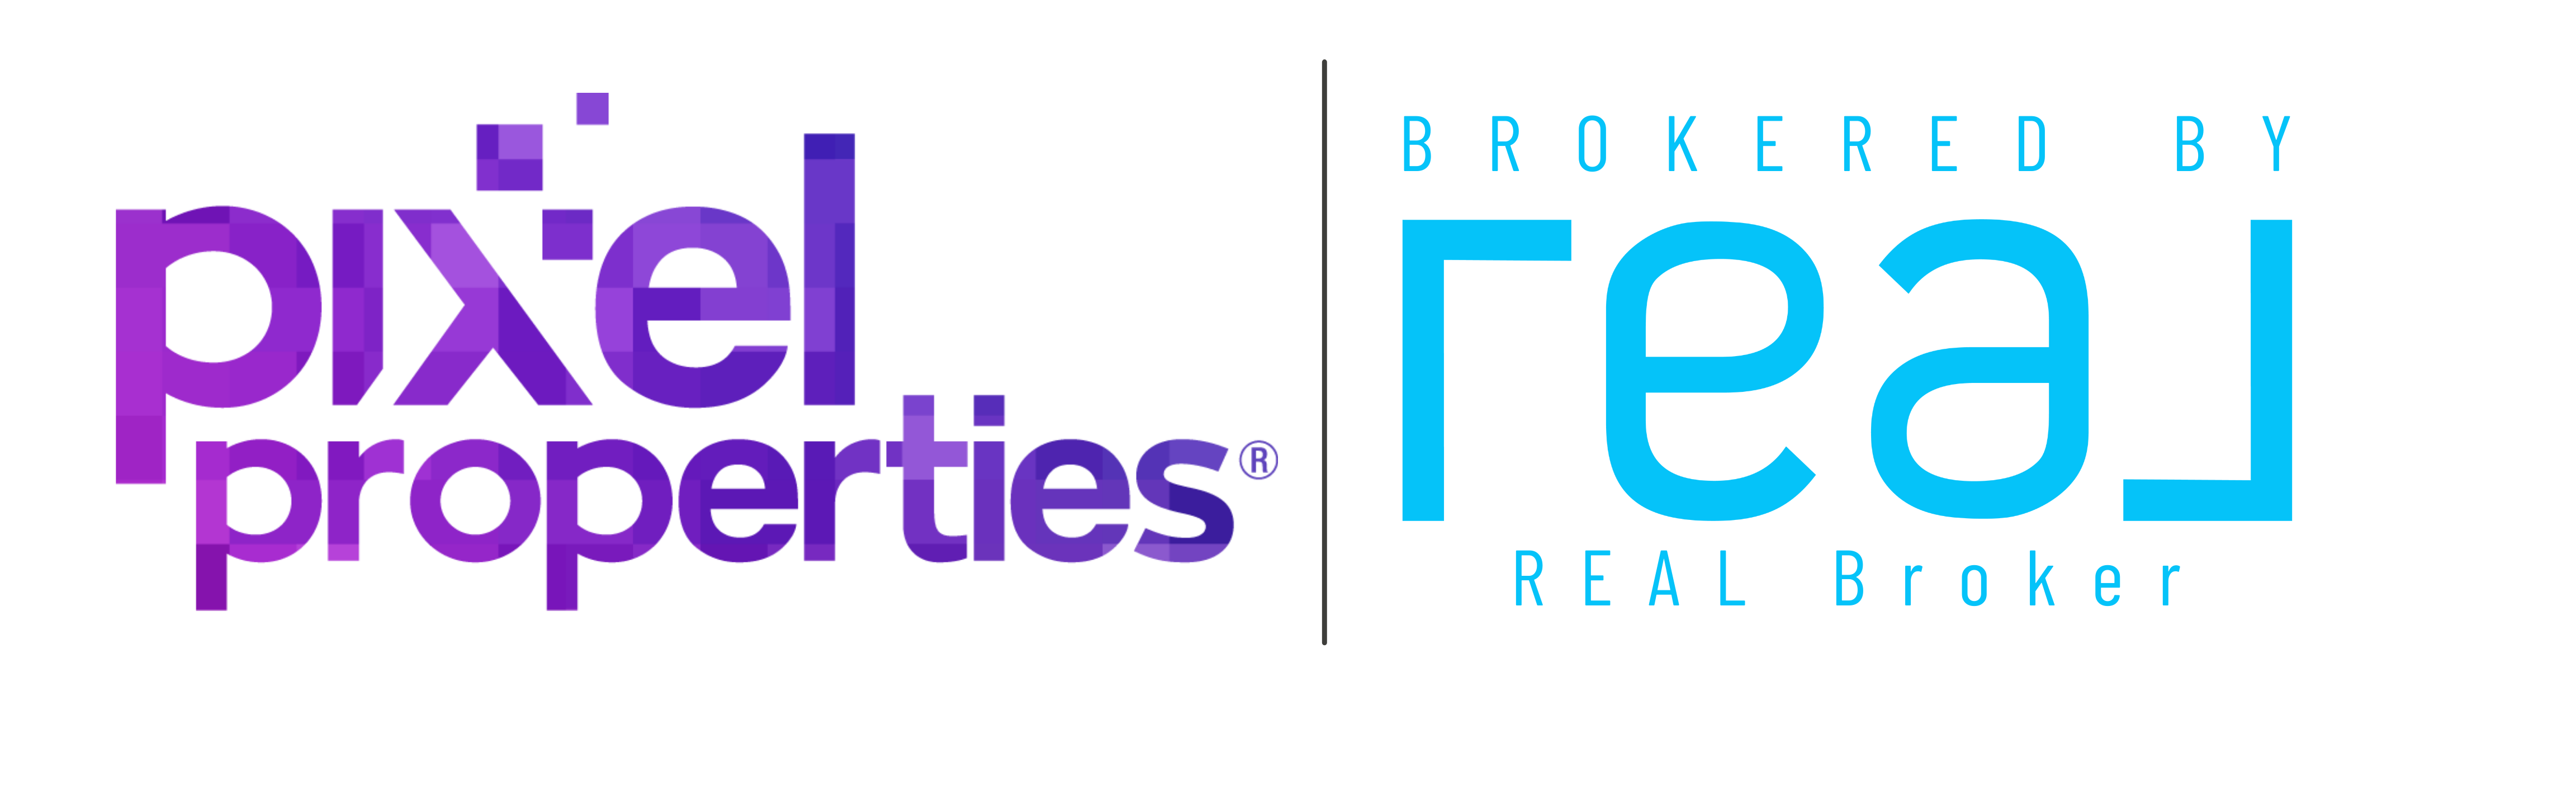 Pixel Properties® | brokered by REAL Broker, LLC